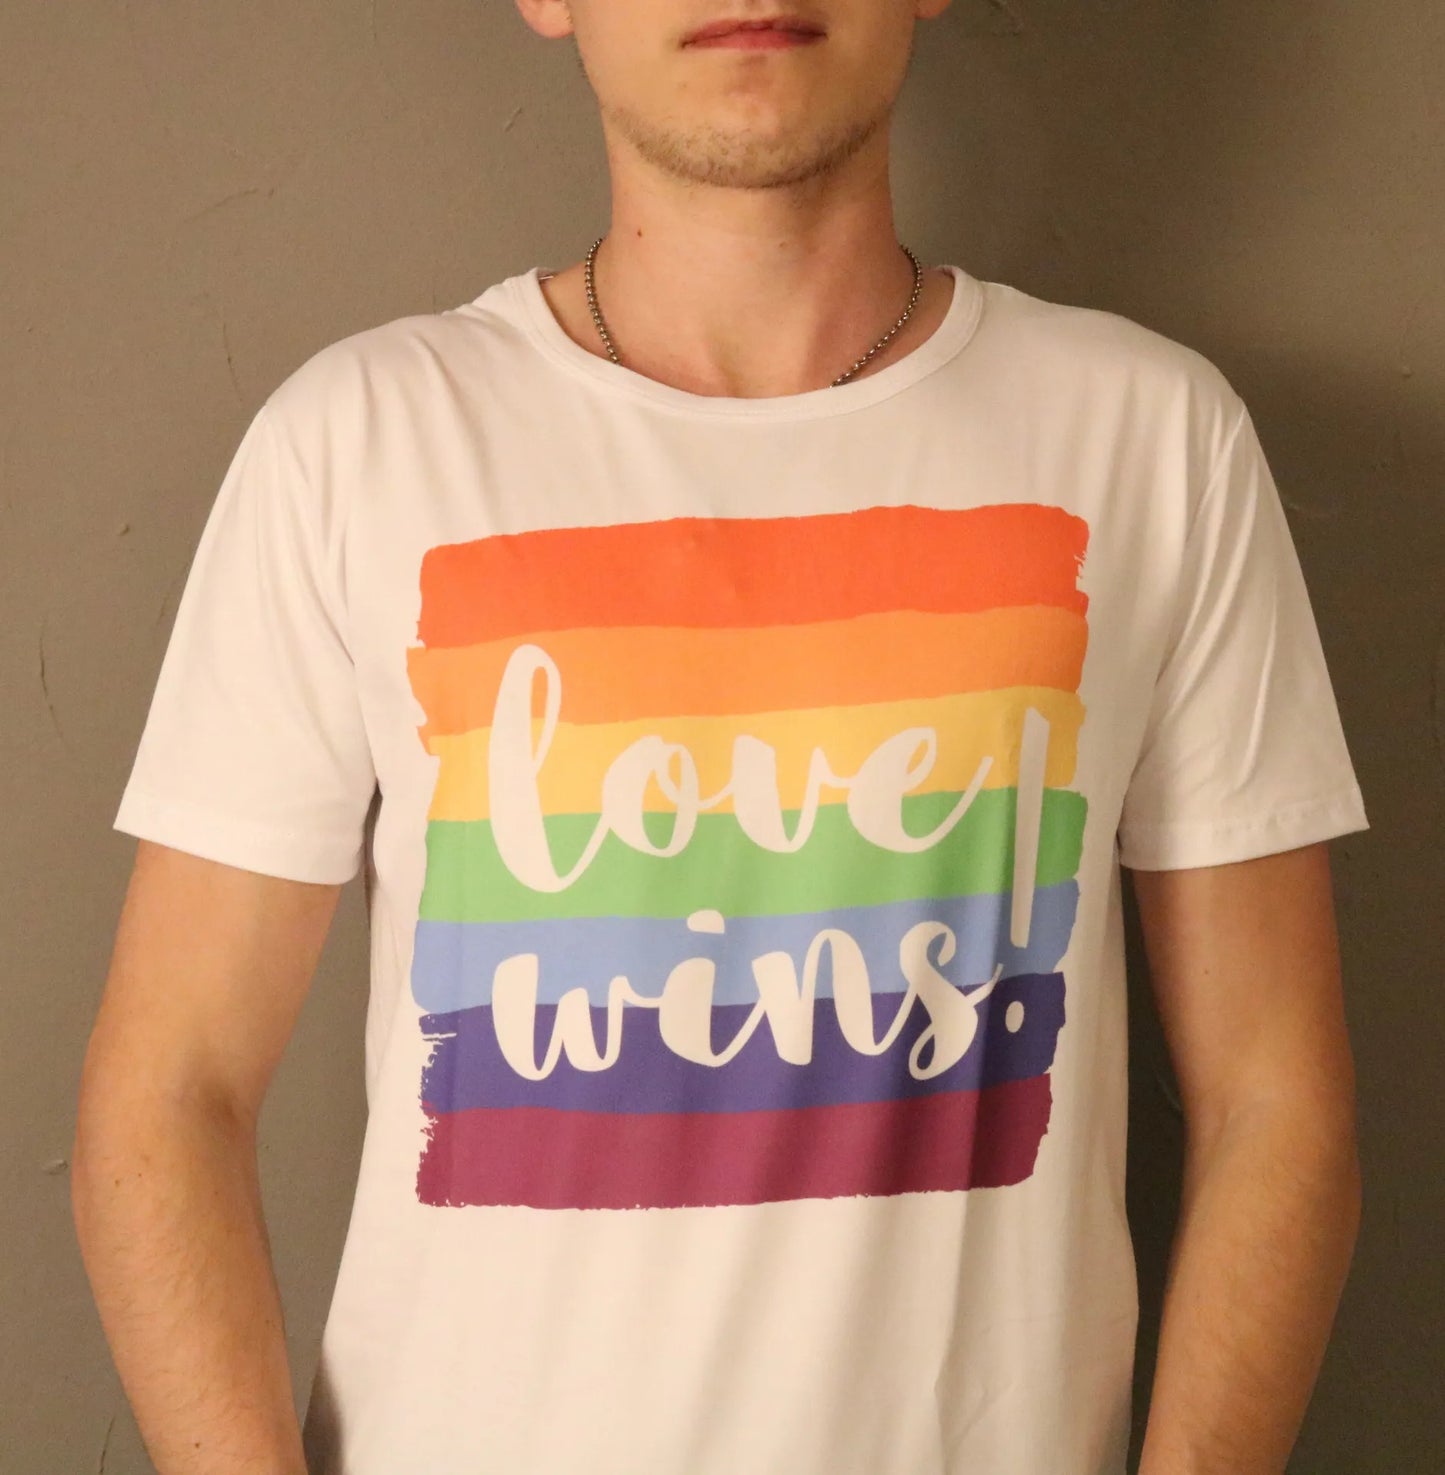 Love wins! T-Shirt Unisex